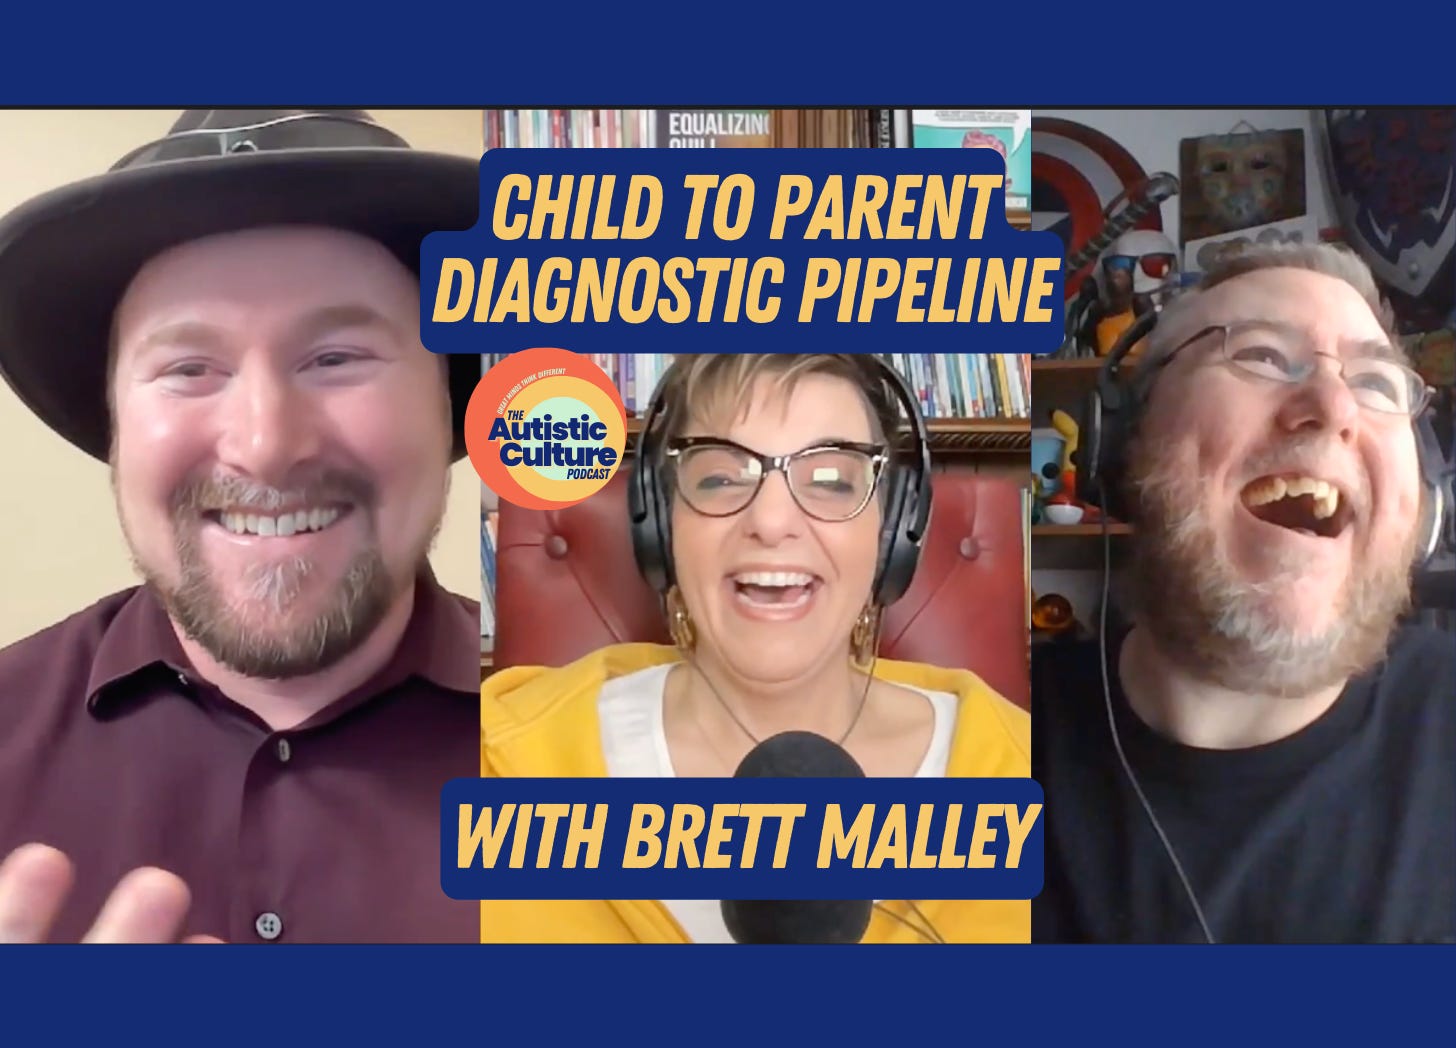 Listen to Autistic podcast hosts discuss: Child-to-Parent Diagnostic Pipeline. Listen now | Wait, that's Autism? But I do that too...